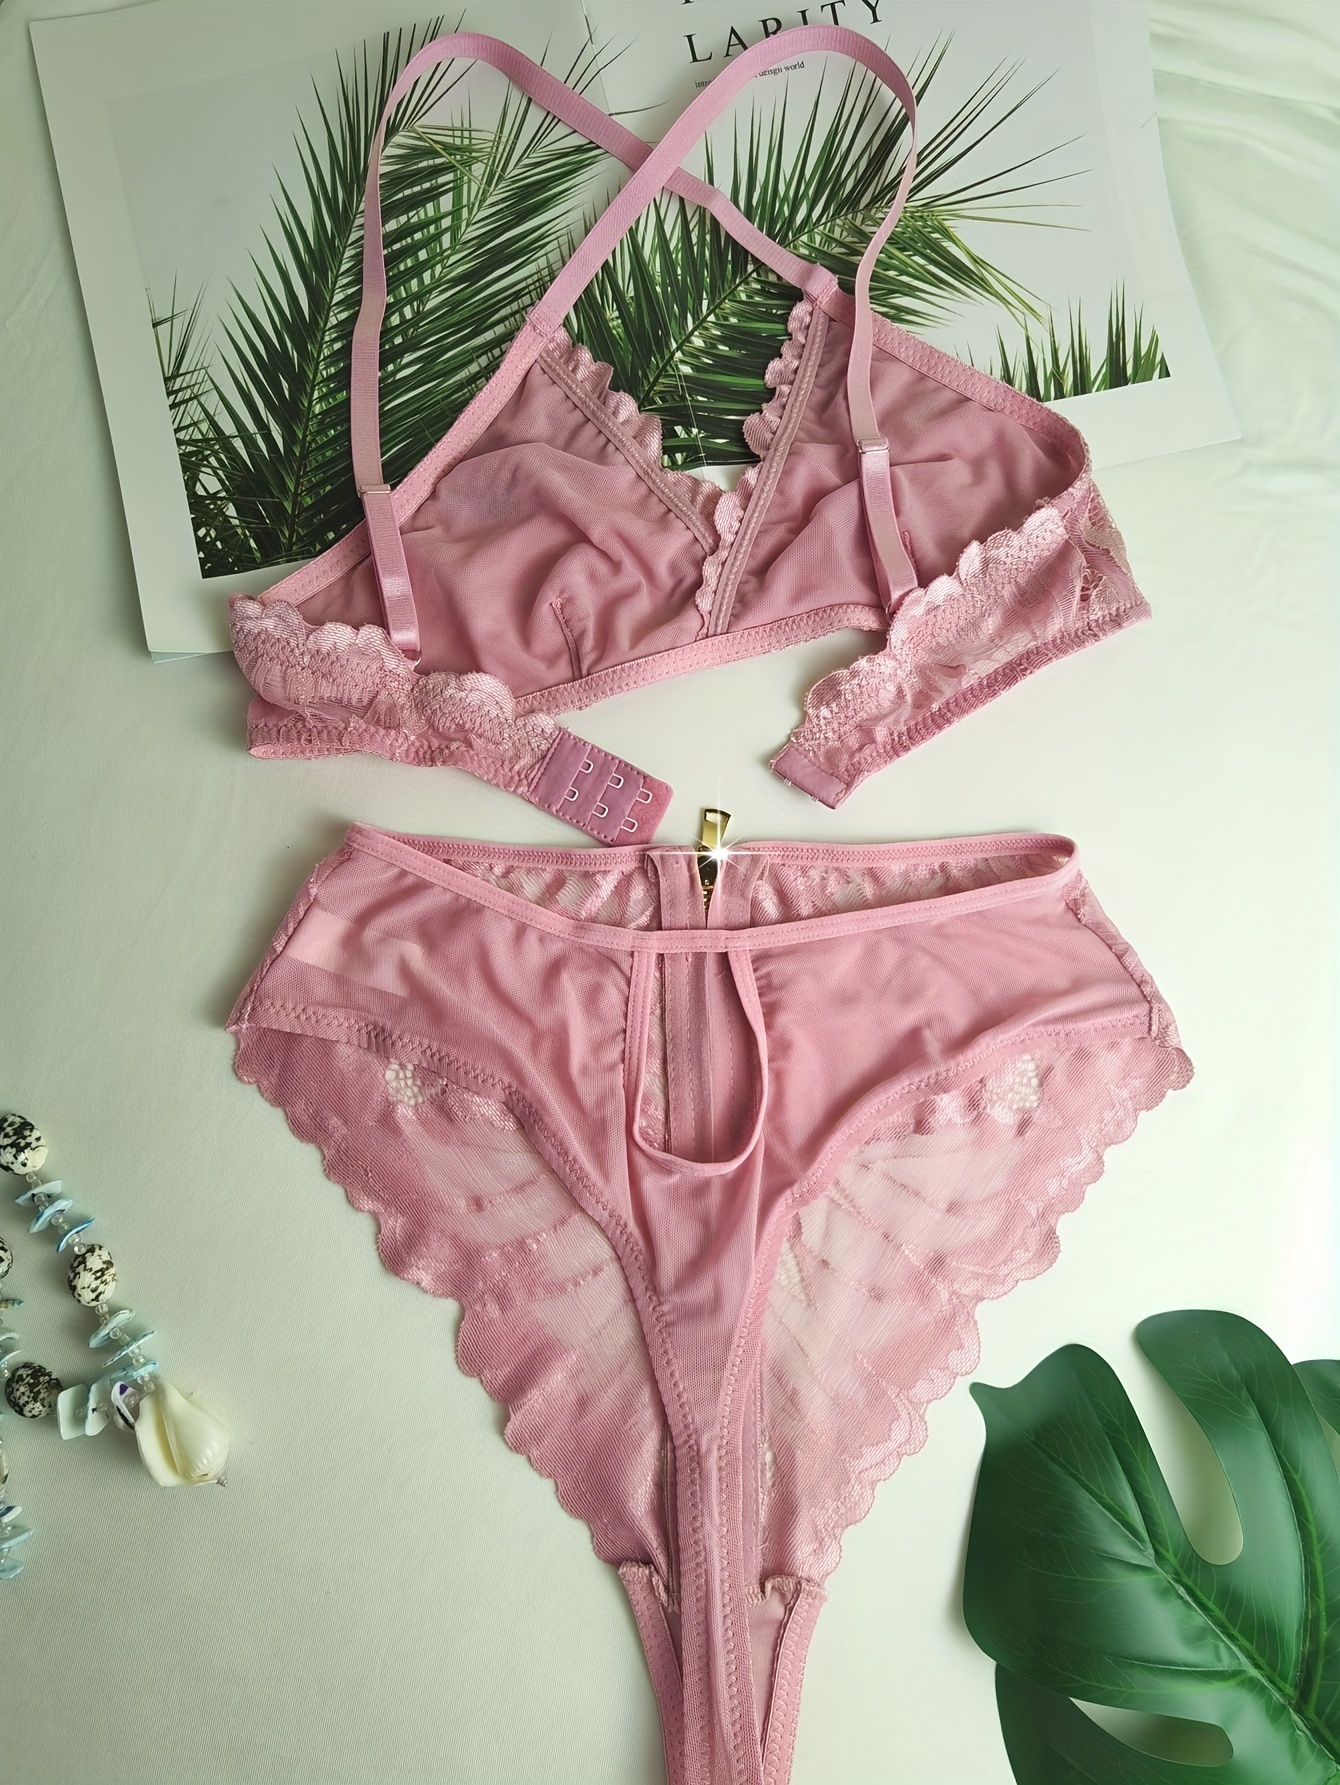 Buy Bikini, Floral Lace Racer Back Bra Underwear Lingerie Hipster Panty, NRLS13-Pink